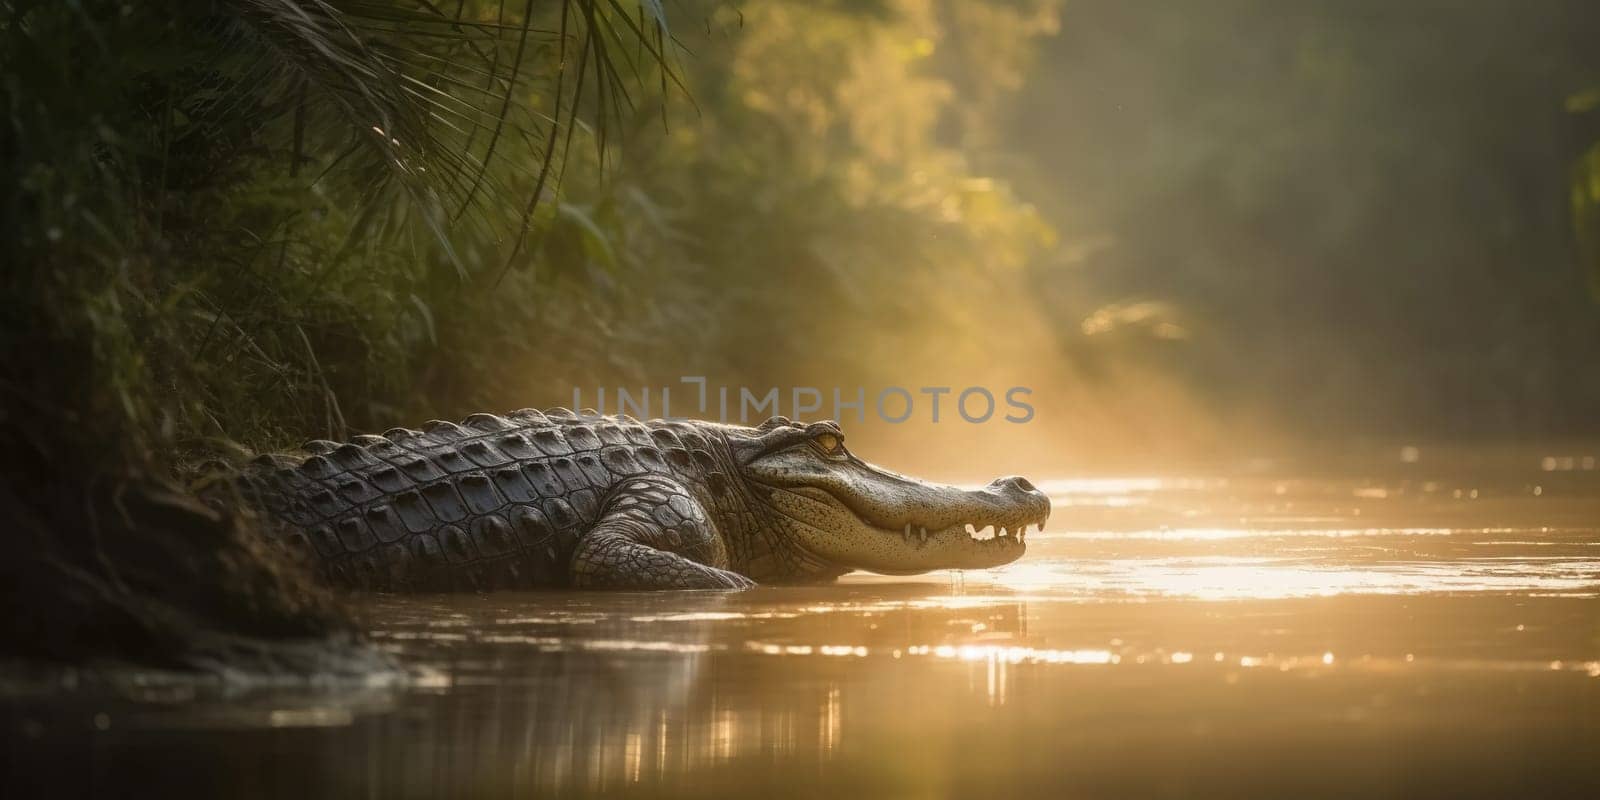 Big African Crocodile In River In The Evening by GekaSkr